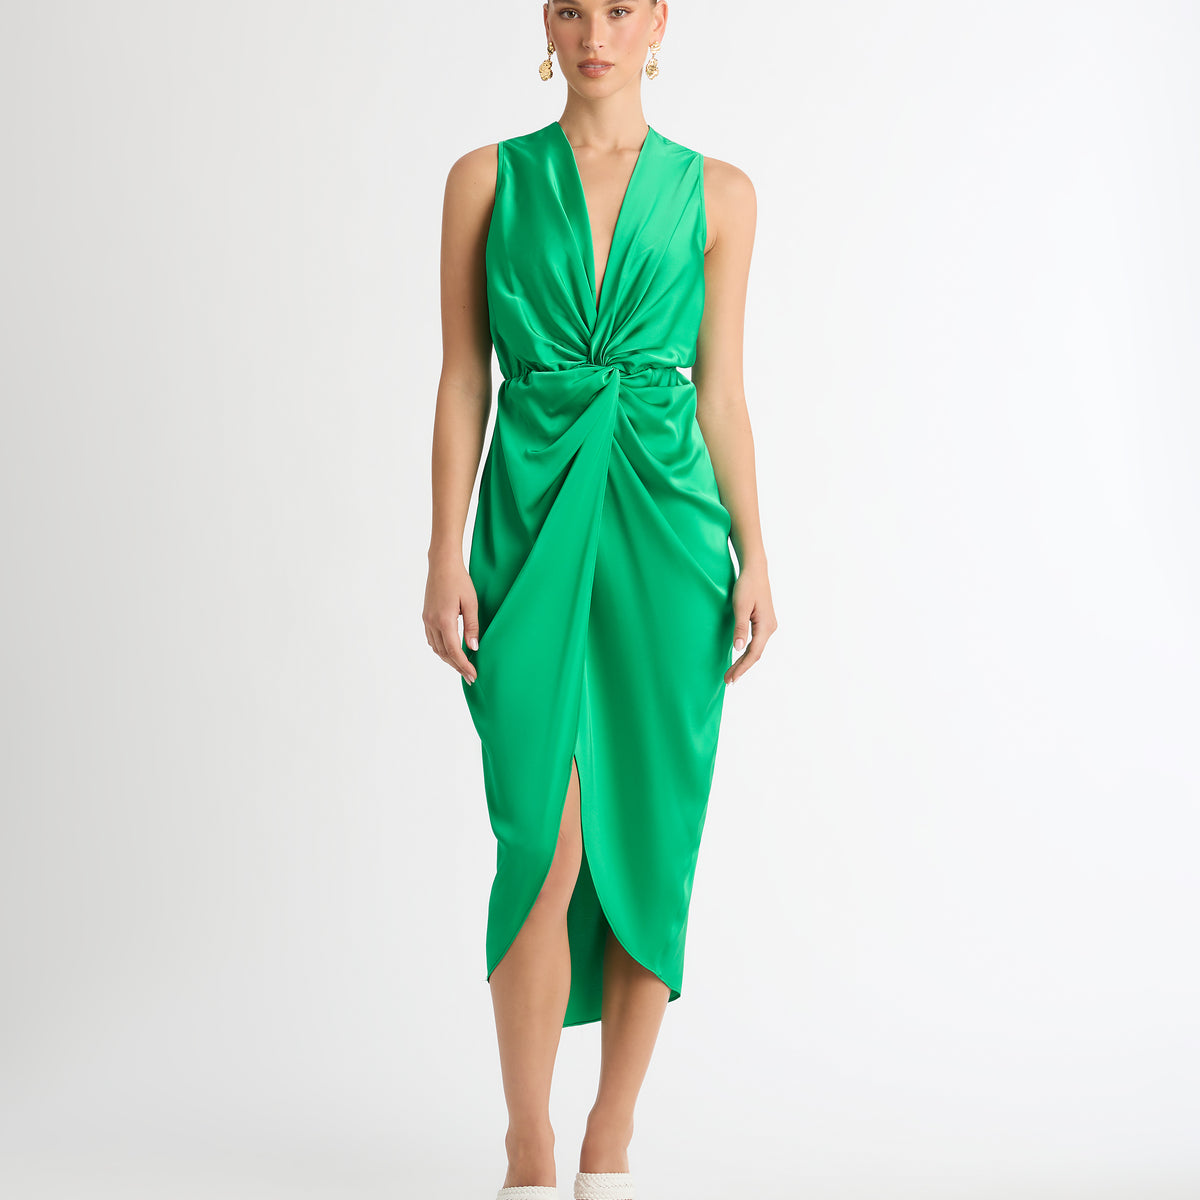 Universal Dress Green | Satin Cocktail Dress | SHEIKE